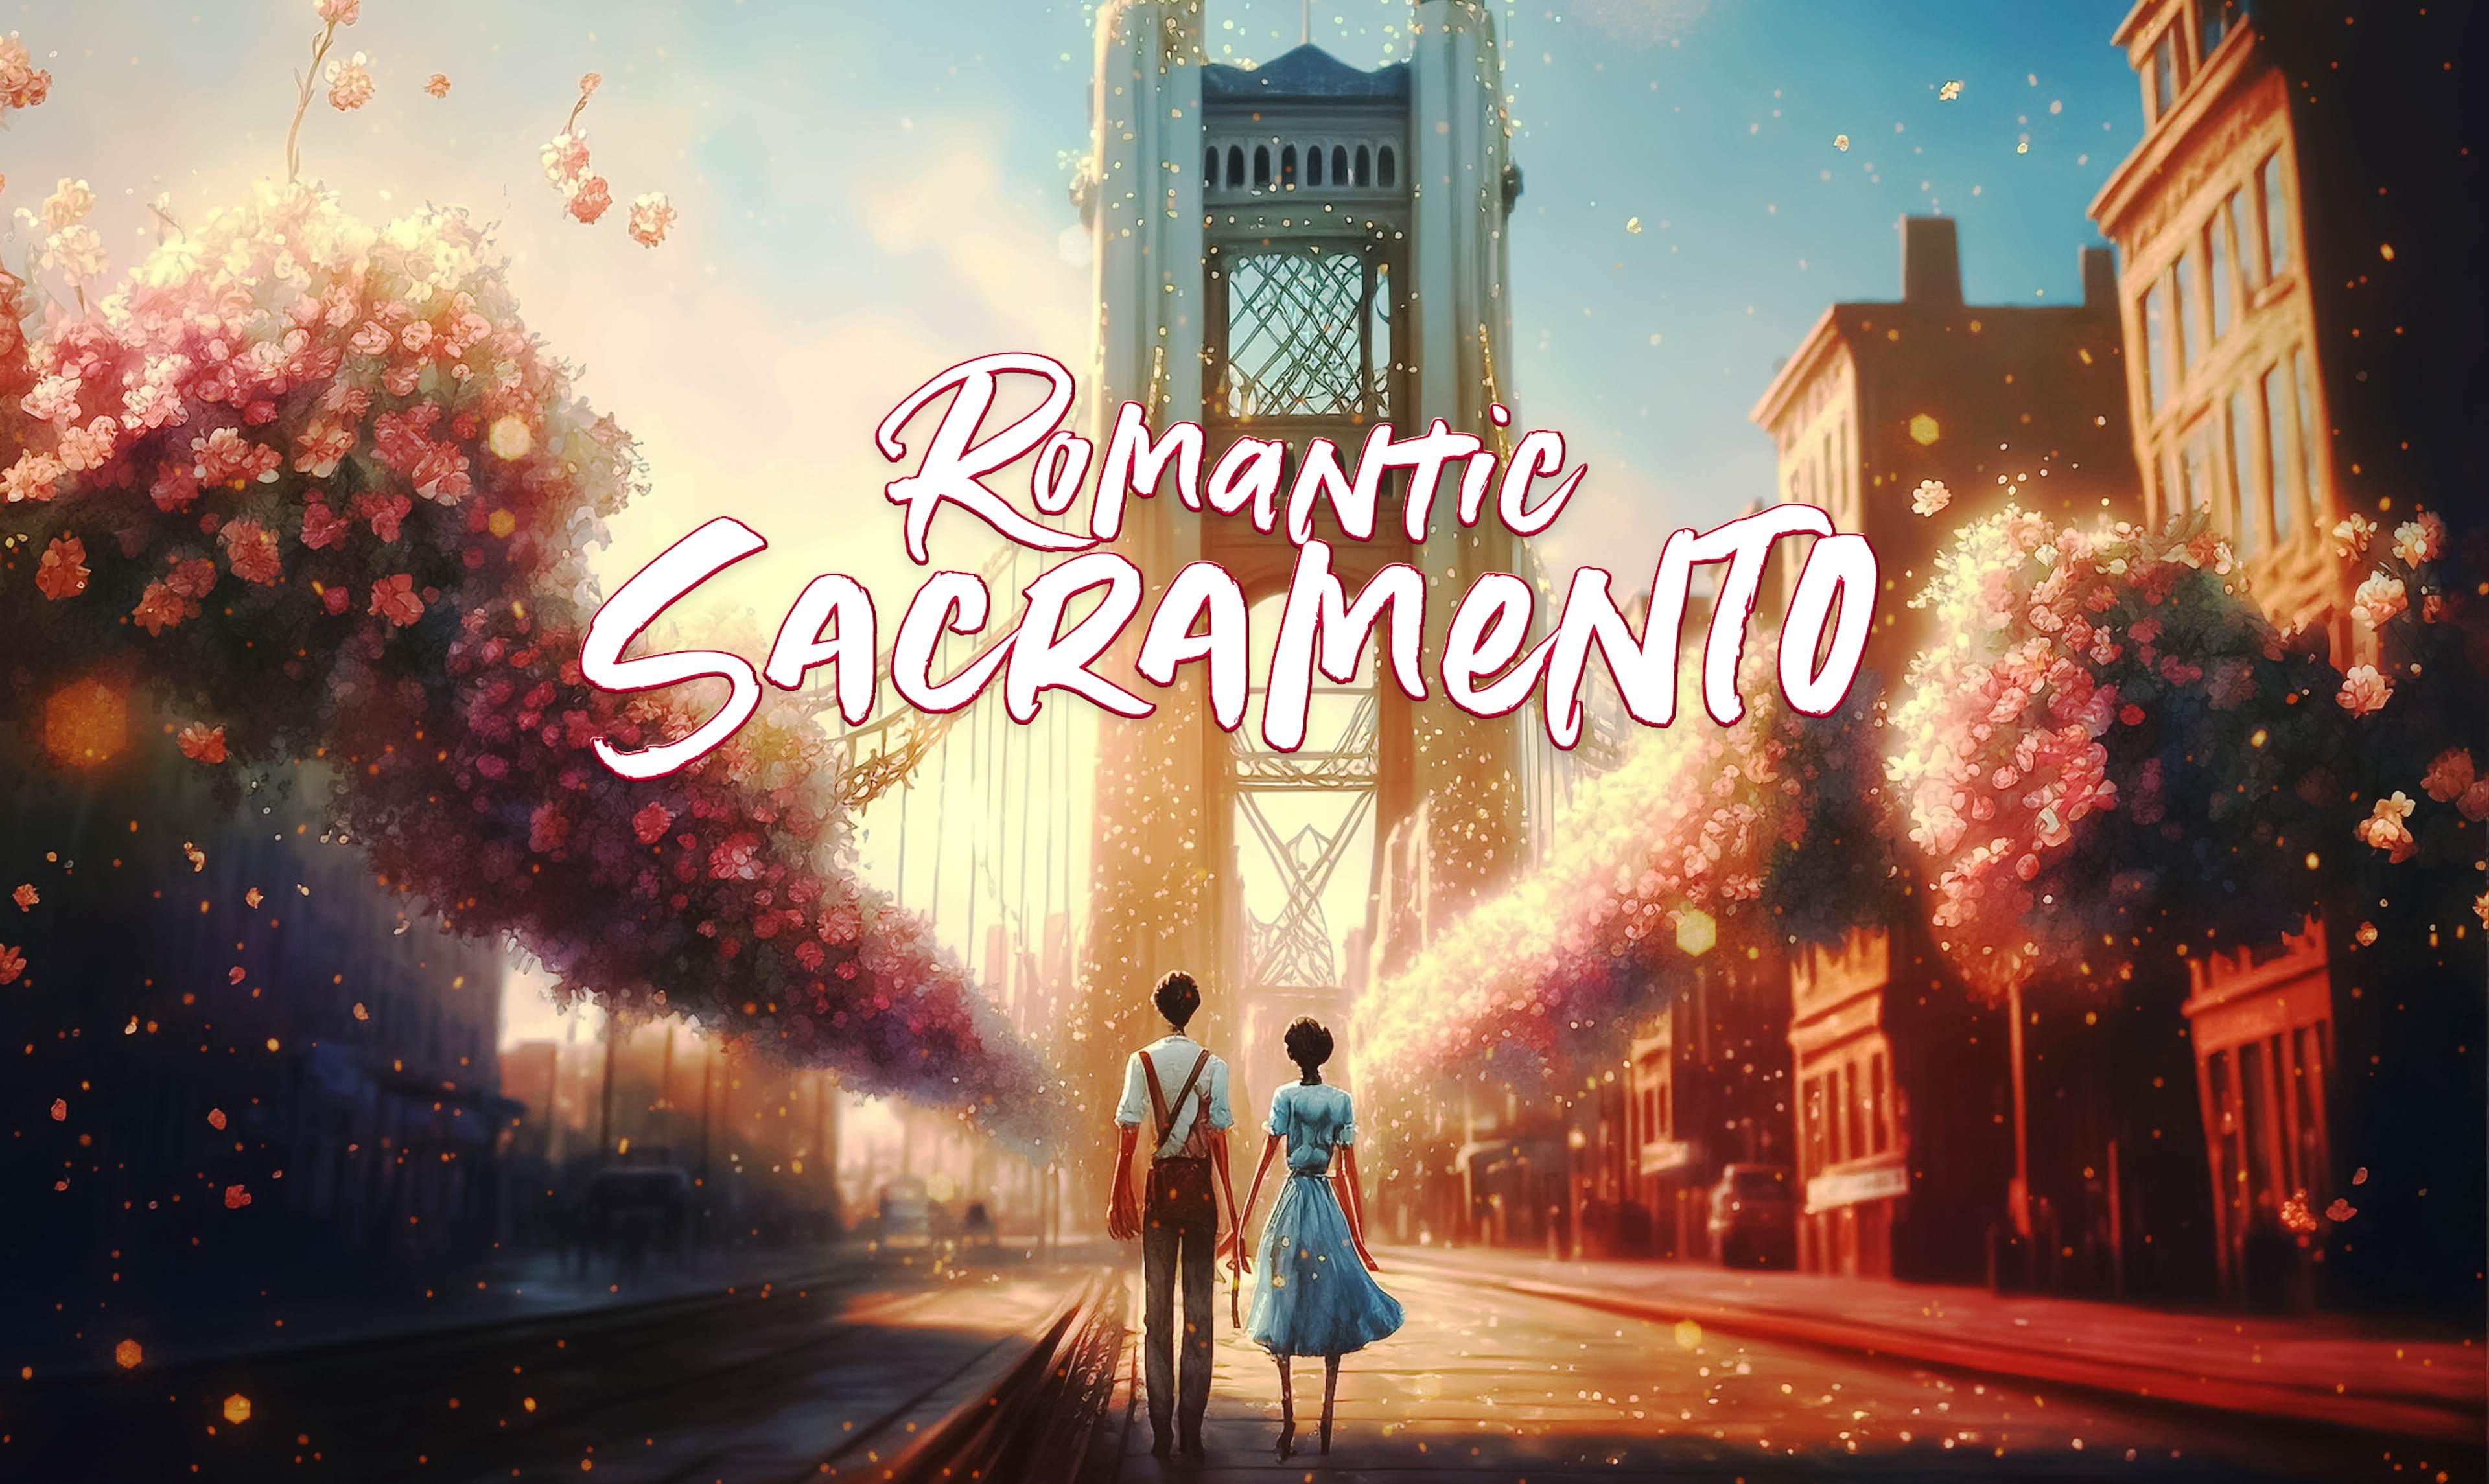 Romantic Sacramento image